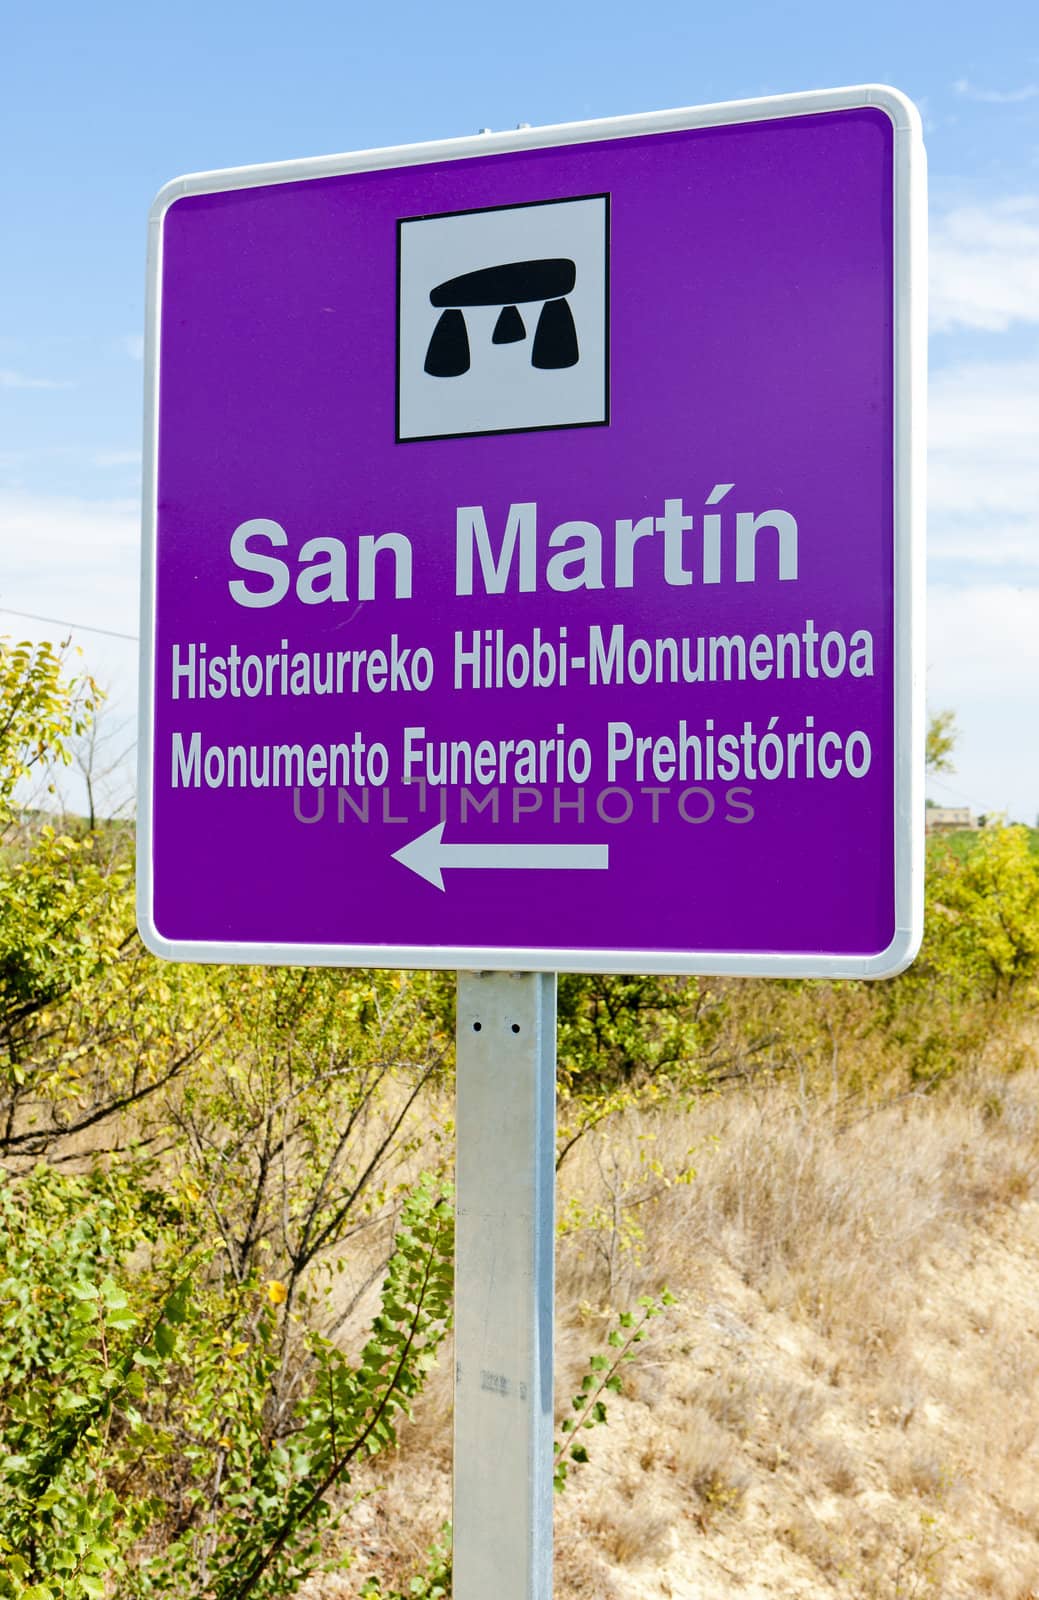 San Martin's tomb, La Rioja, Spain by phbcz